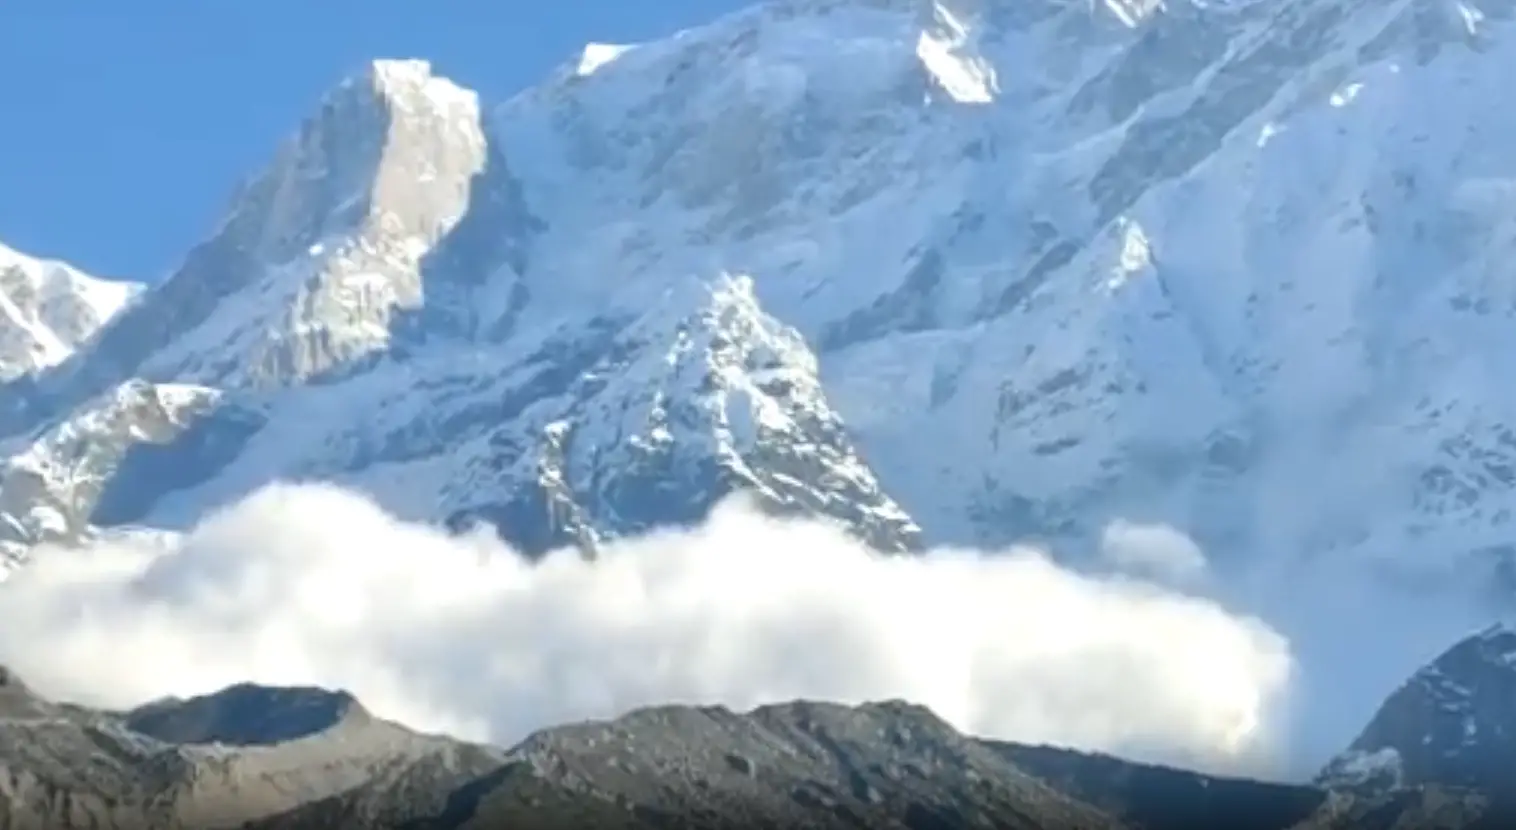 Massive avalanche in kedarnath